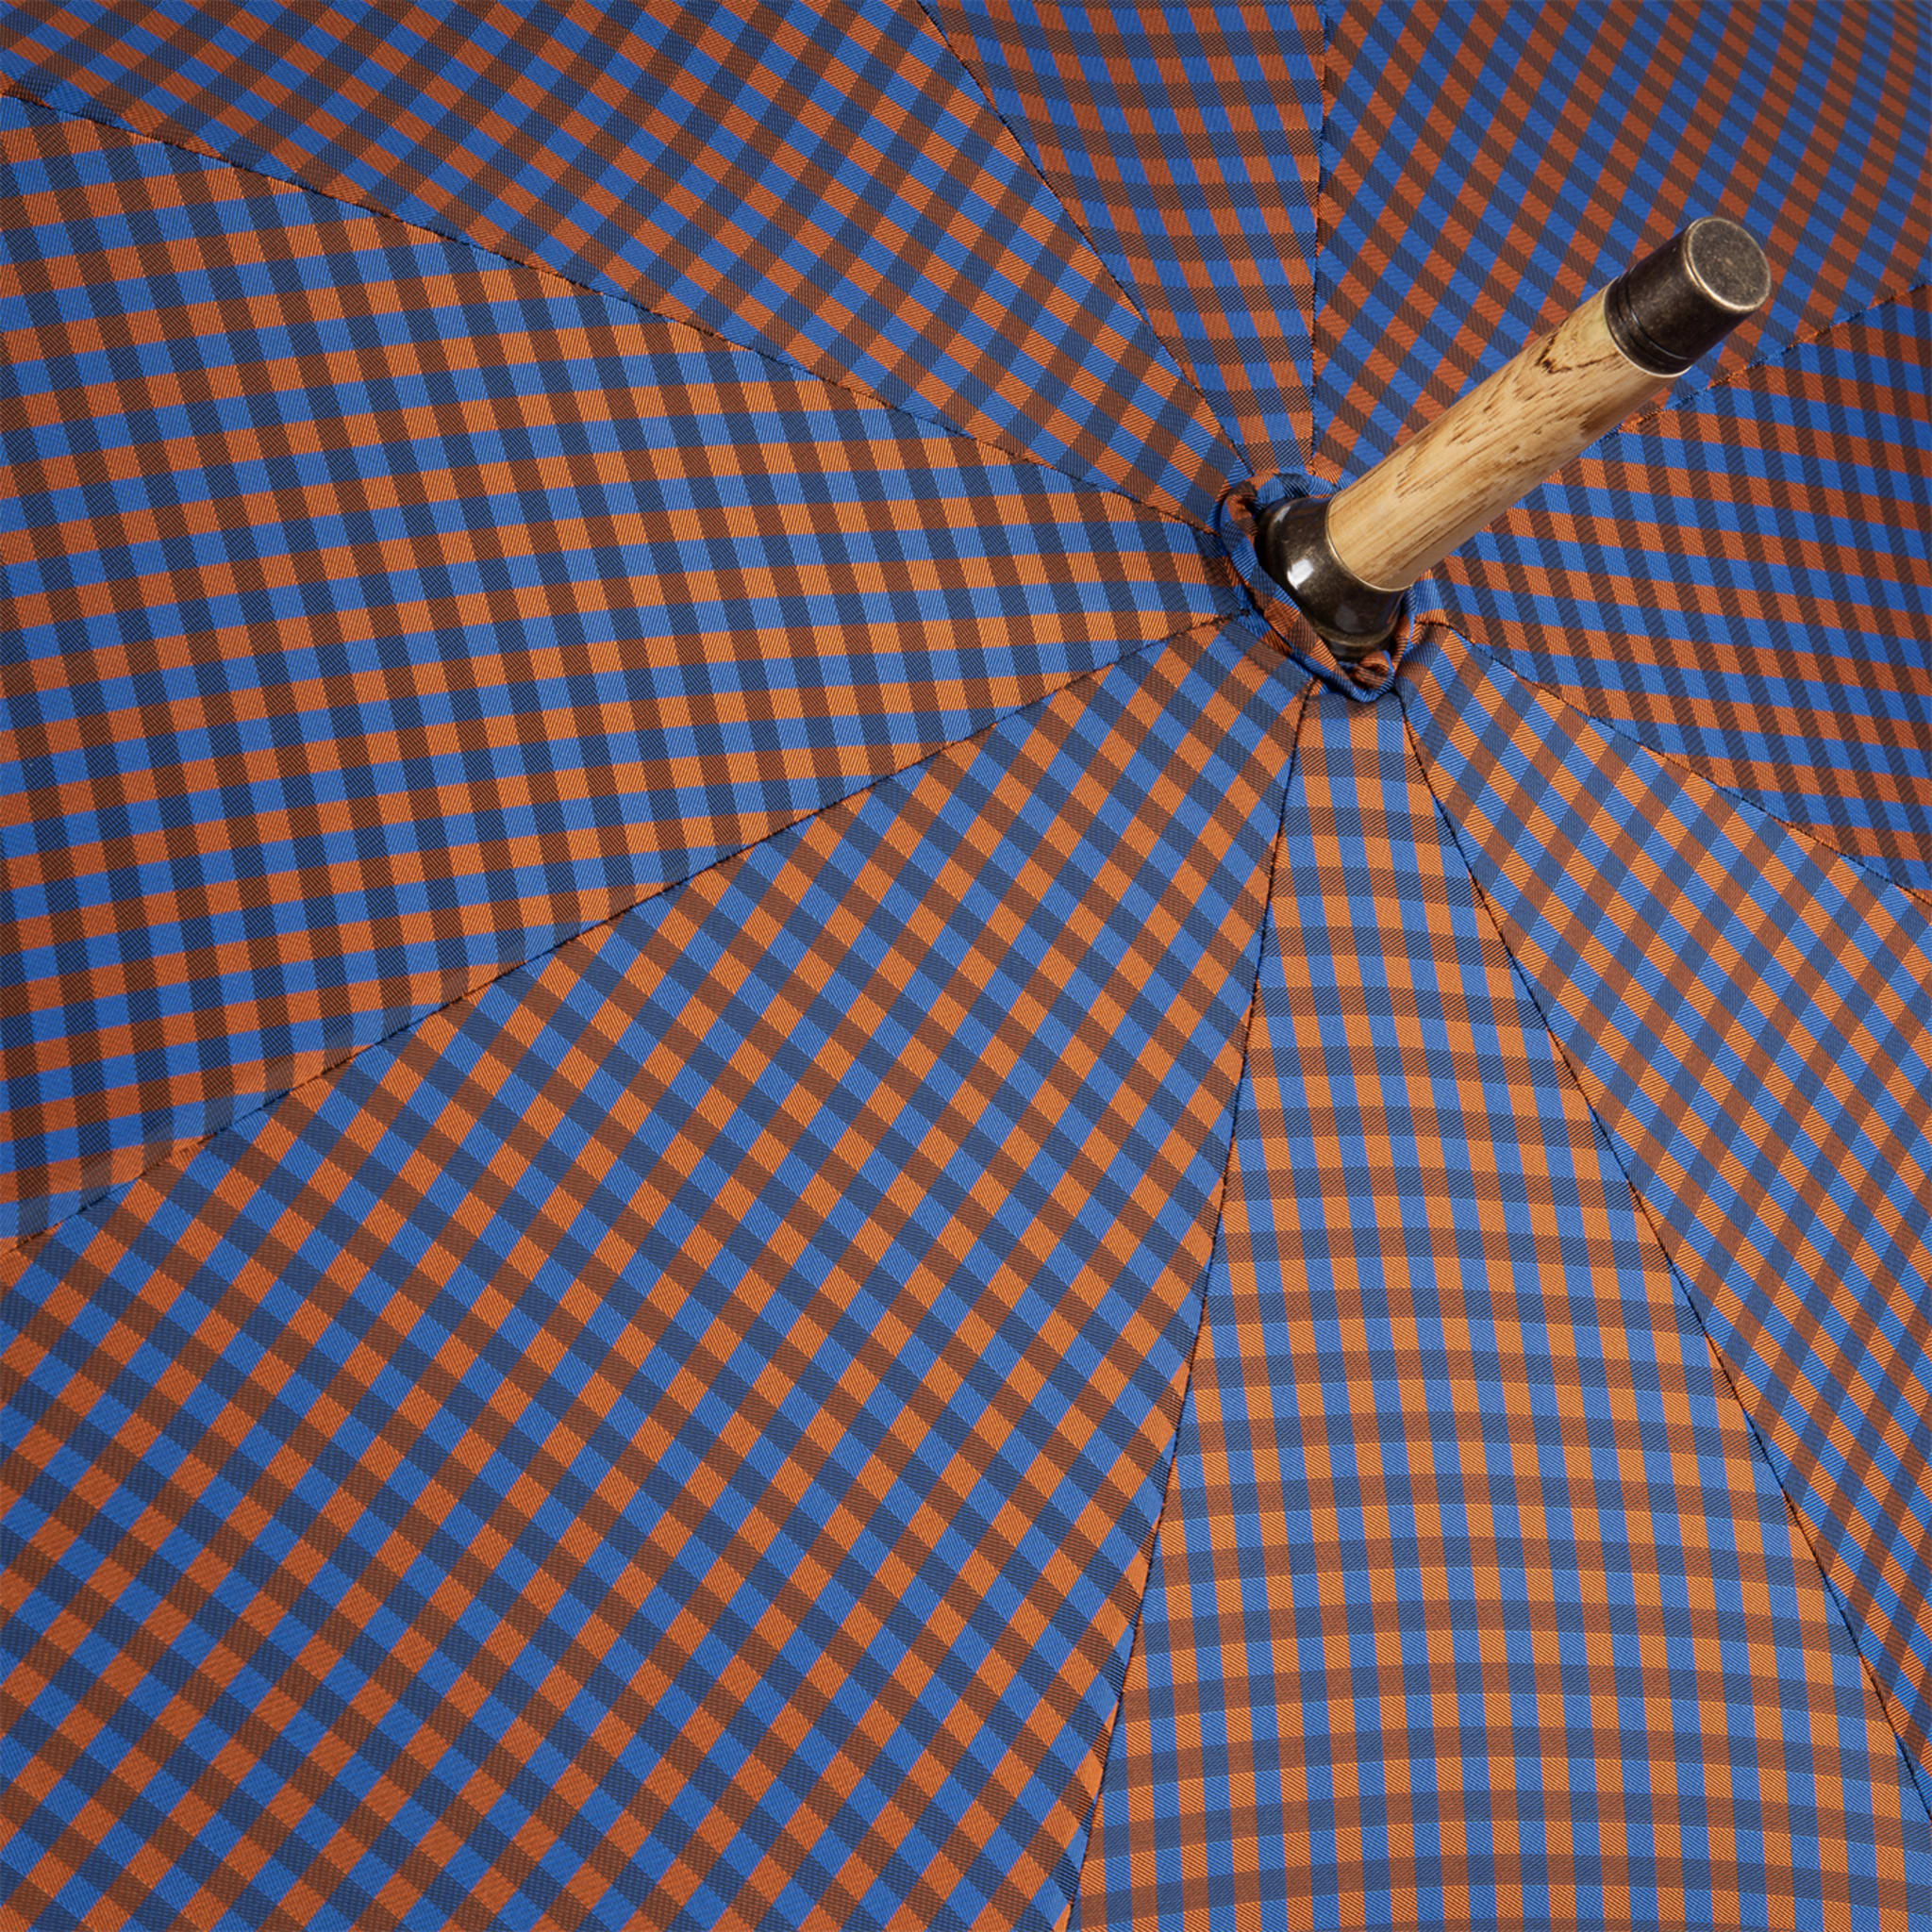 Blue and Orange Umbrella - Alternative view 1